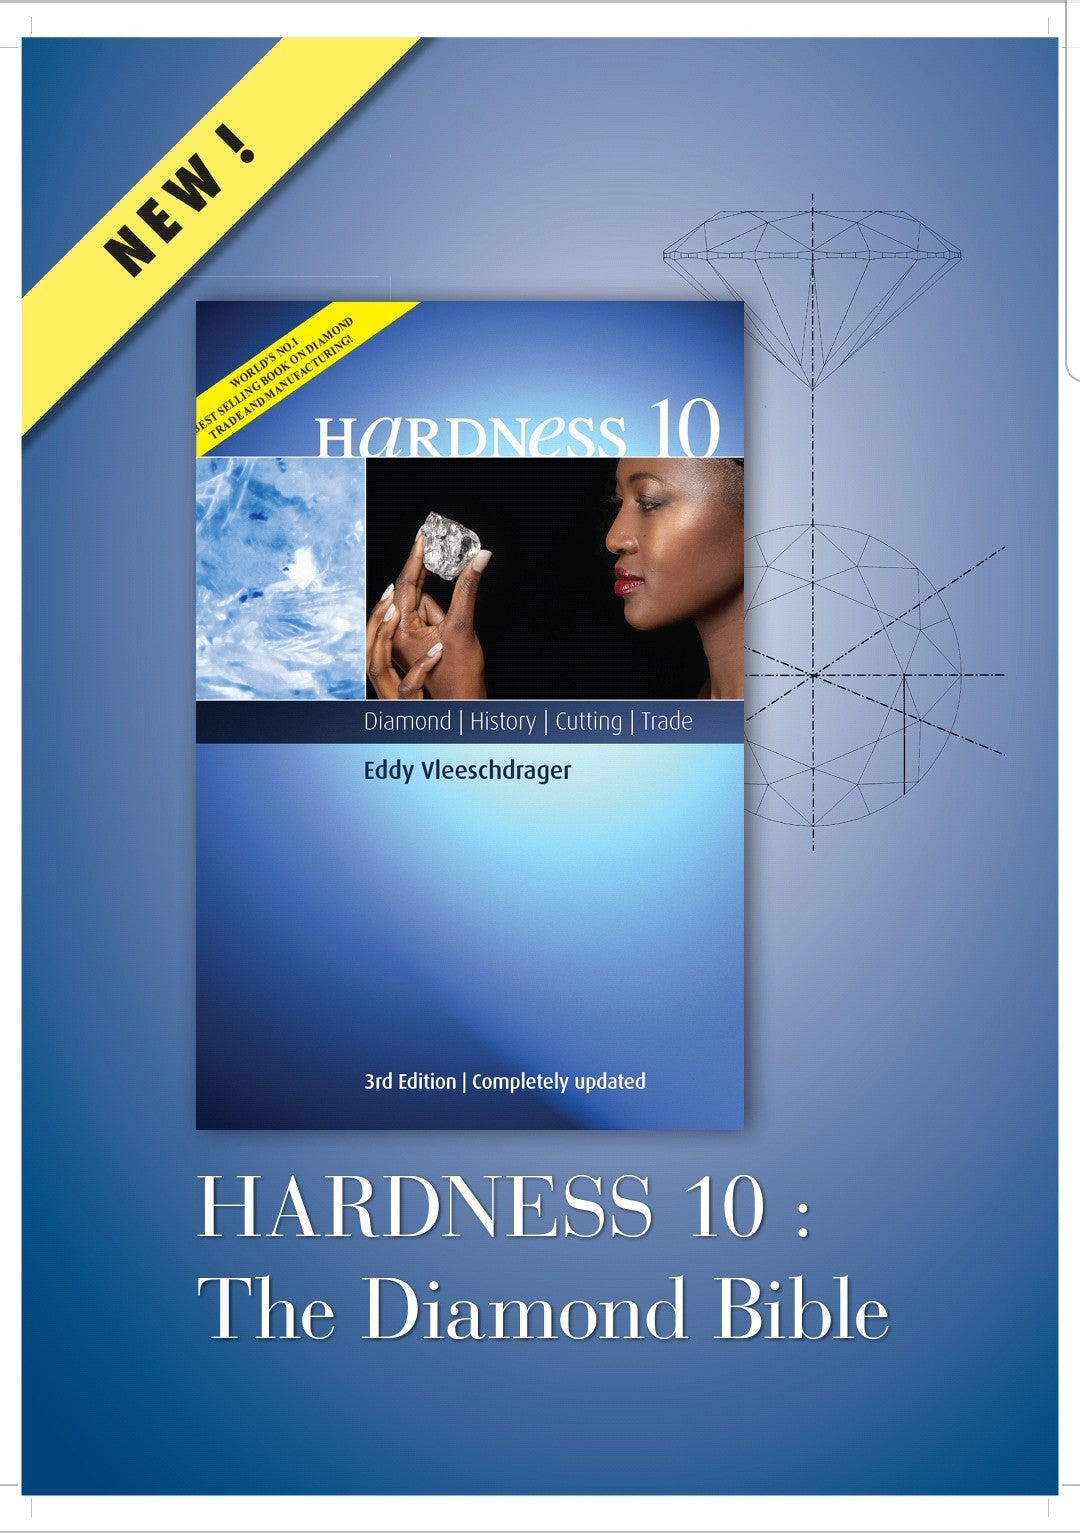 NEW! BOOK HARDNESS 10